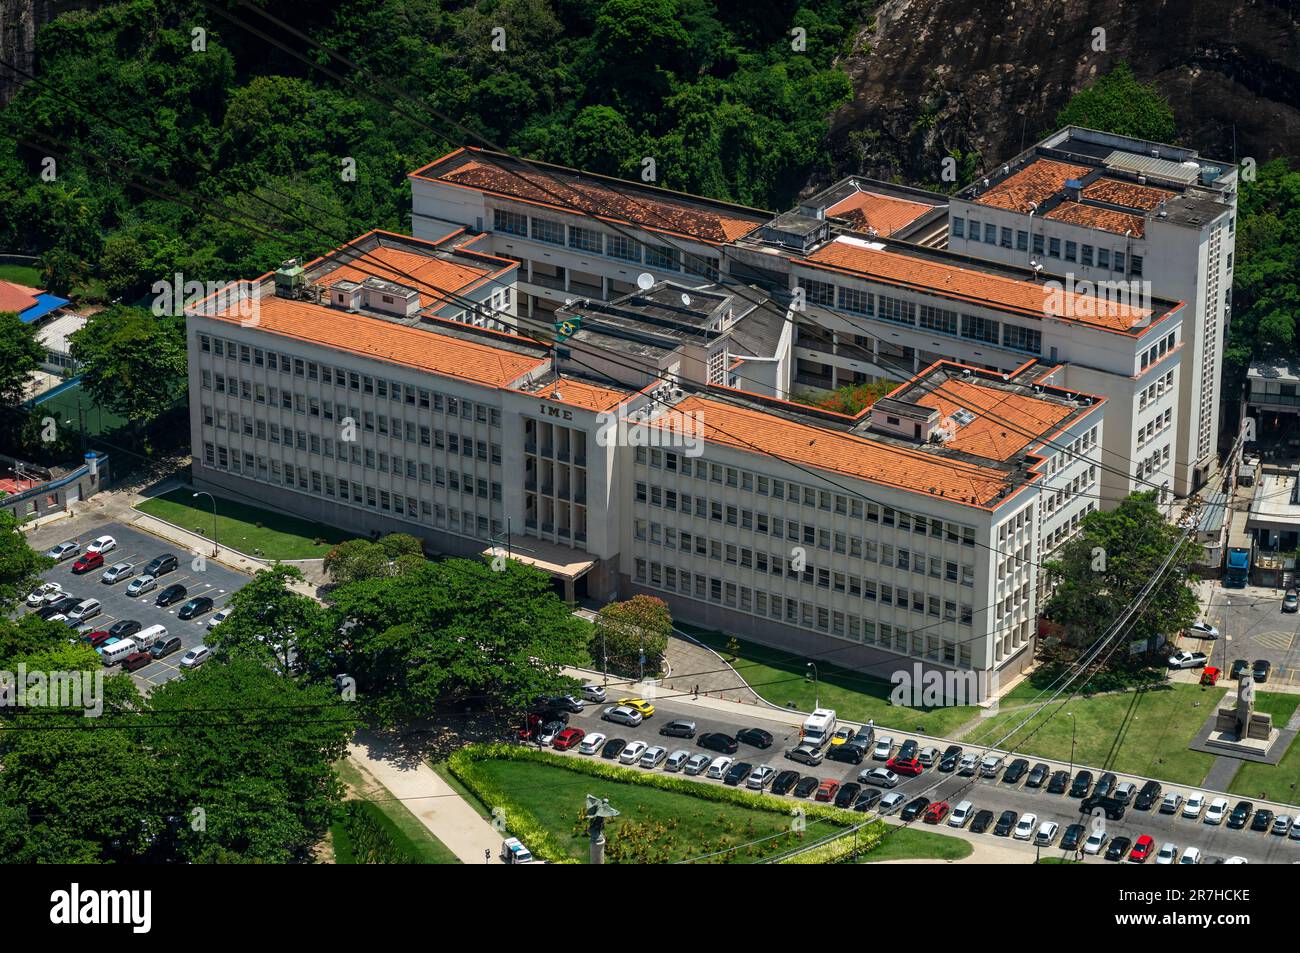 Aerial View of Urca Neighborhood in the City of Rio de Janeiro, Brazil  Stock Photo - Alamy